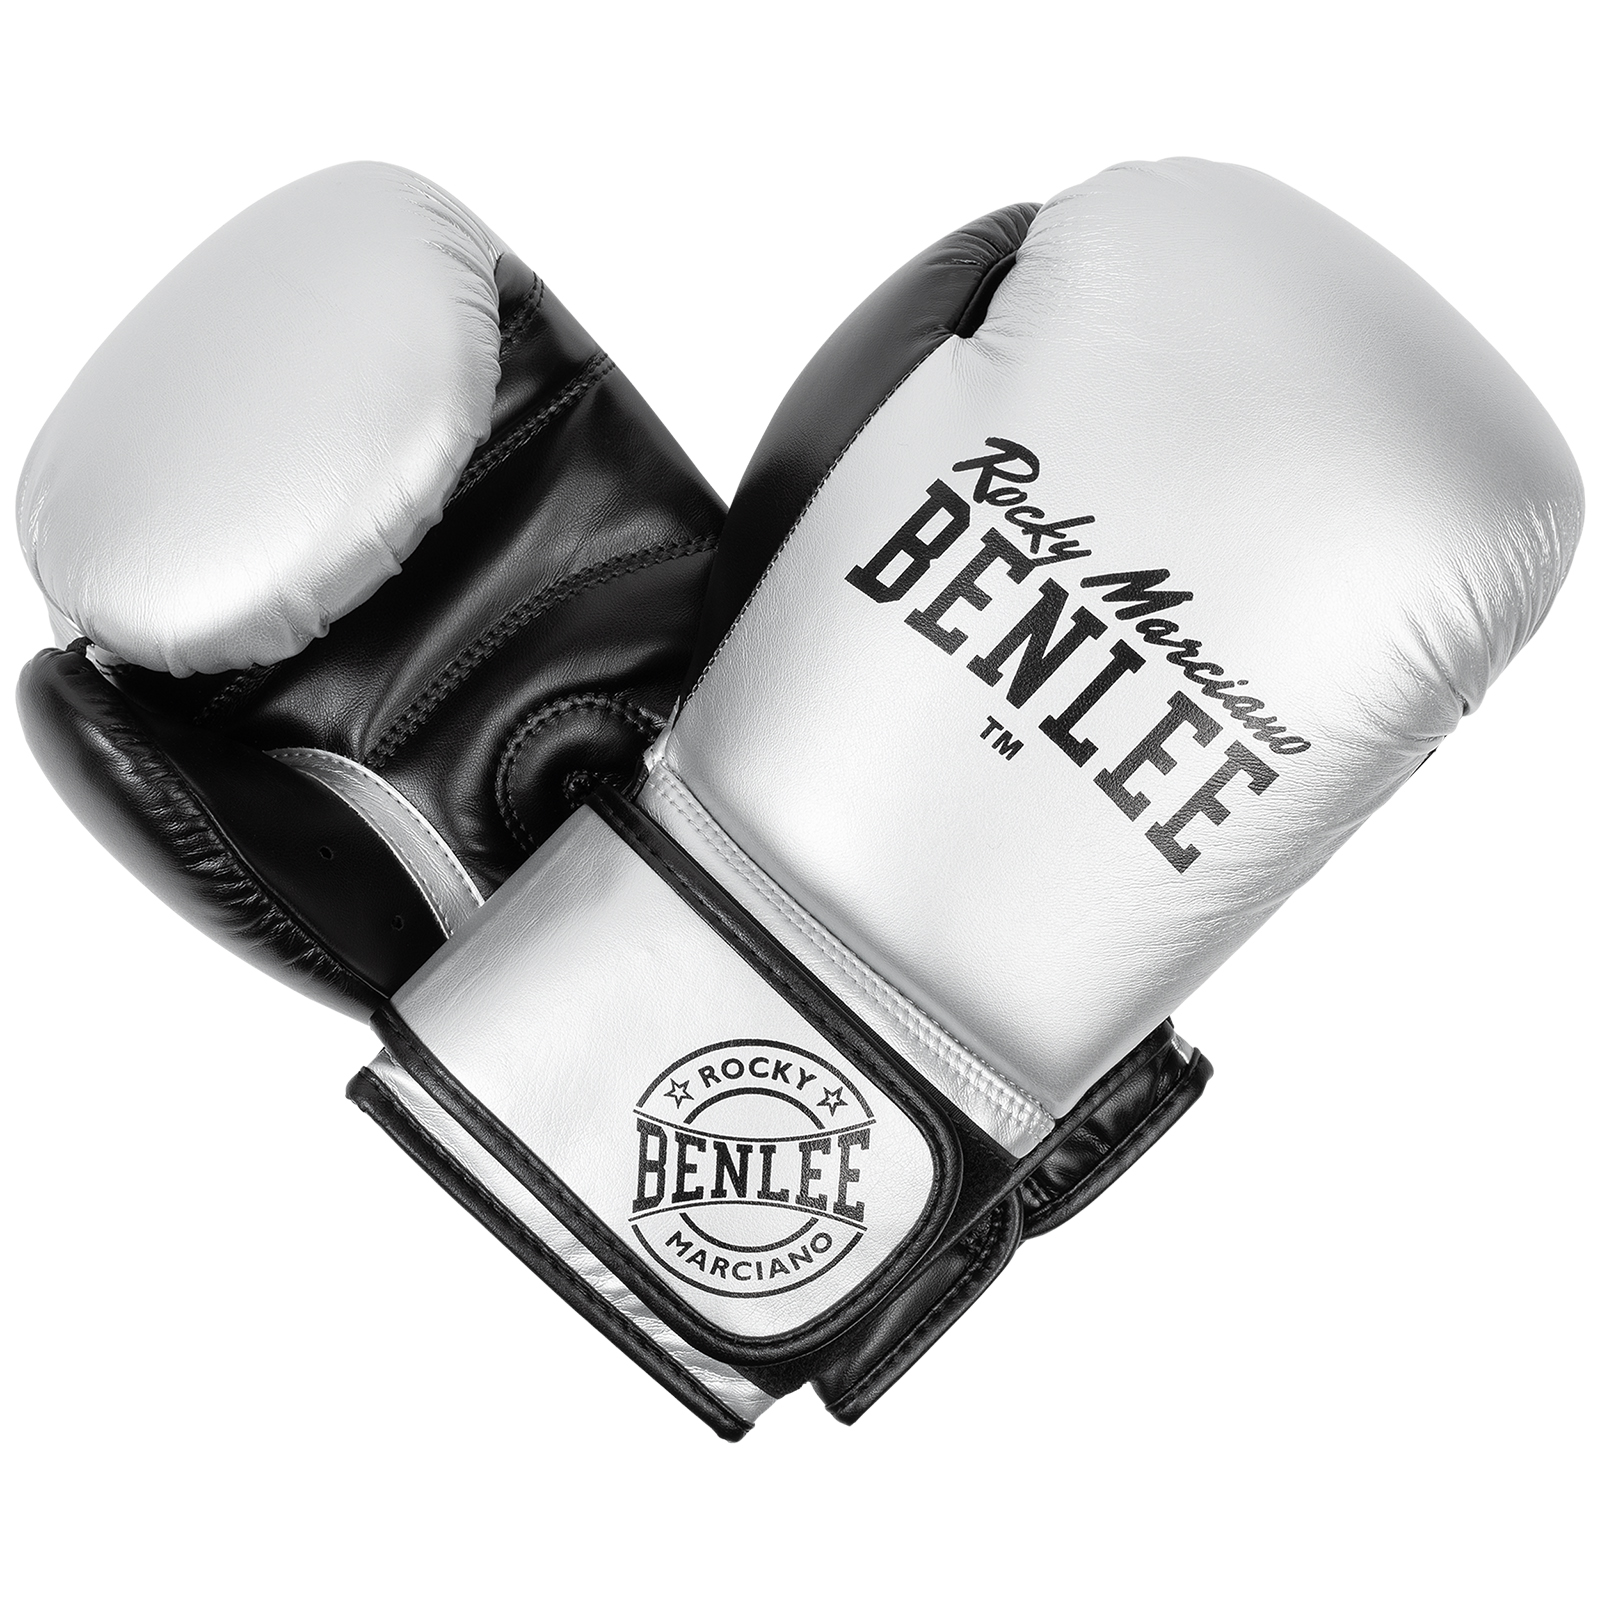  Боксерские перчатки Benlee Carlos серебро 